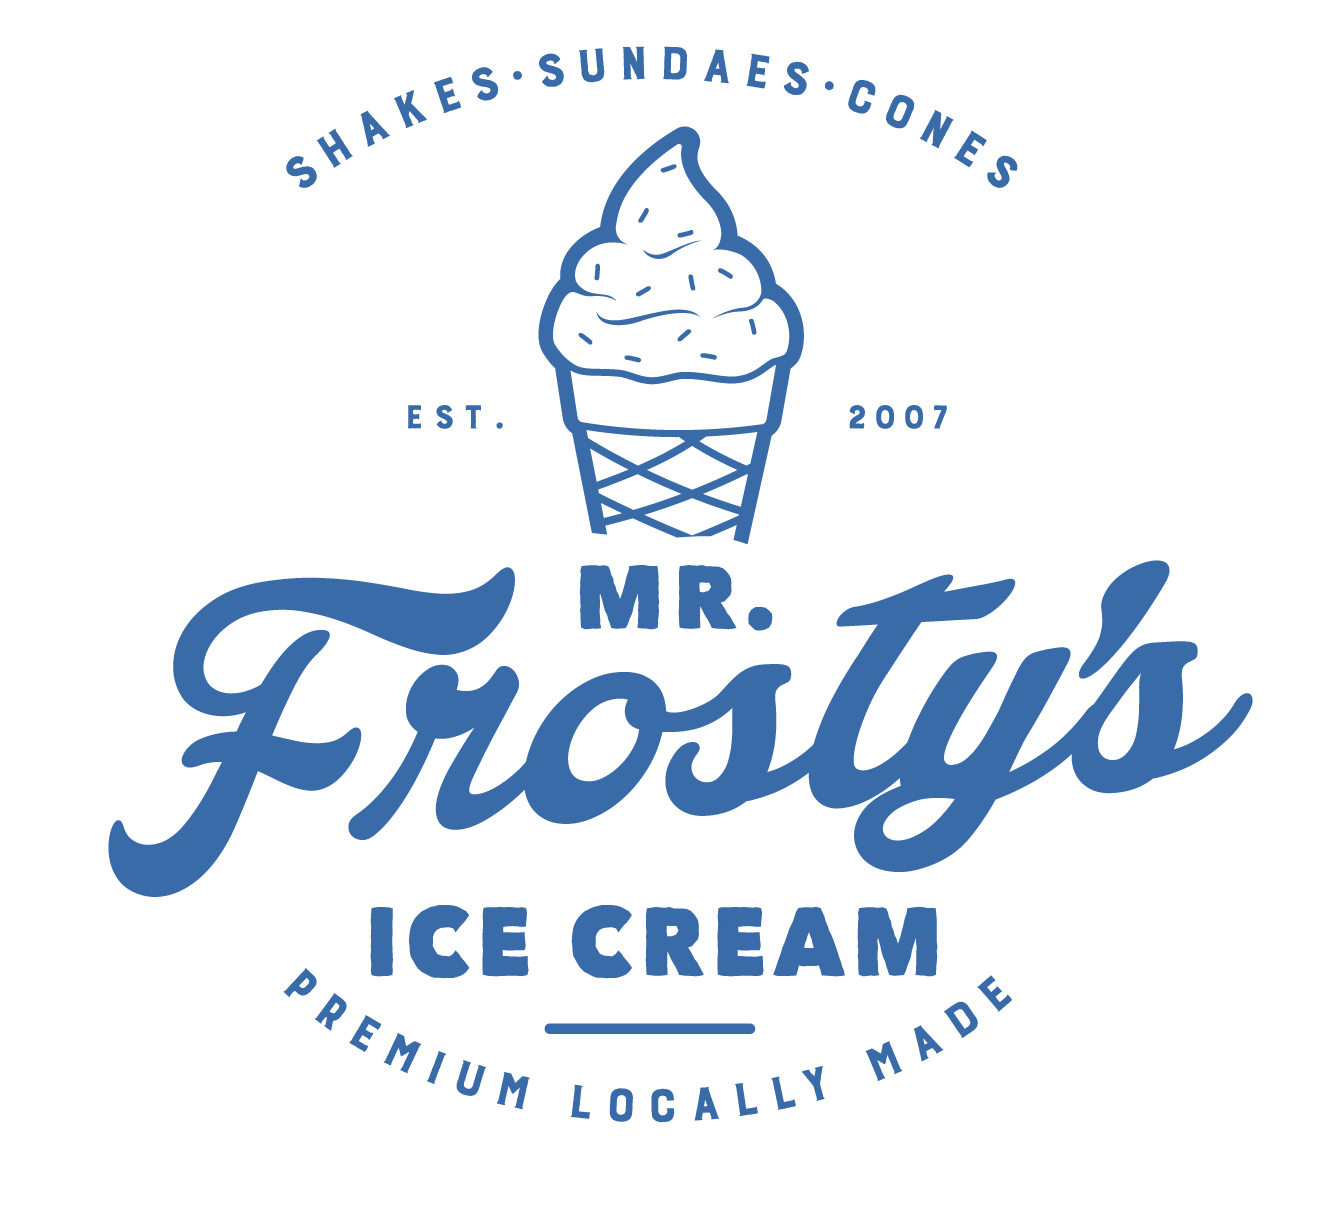 Mr. Frosty's Ice Cream